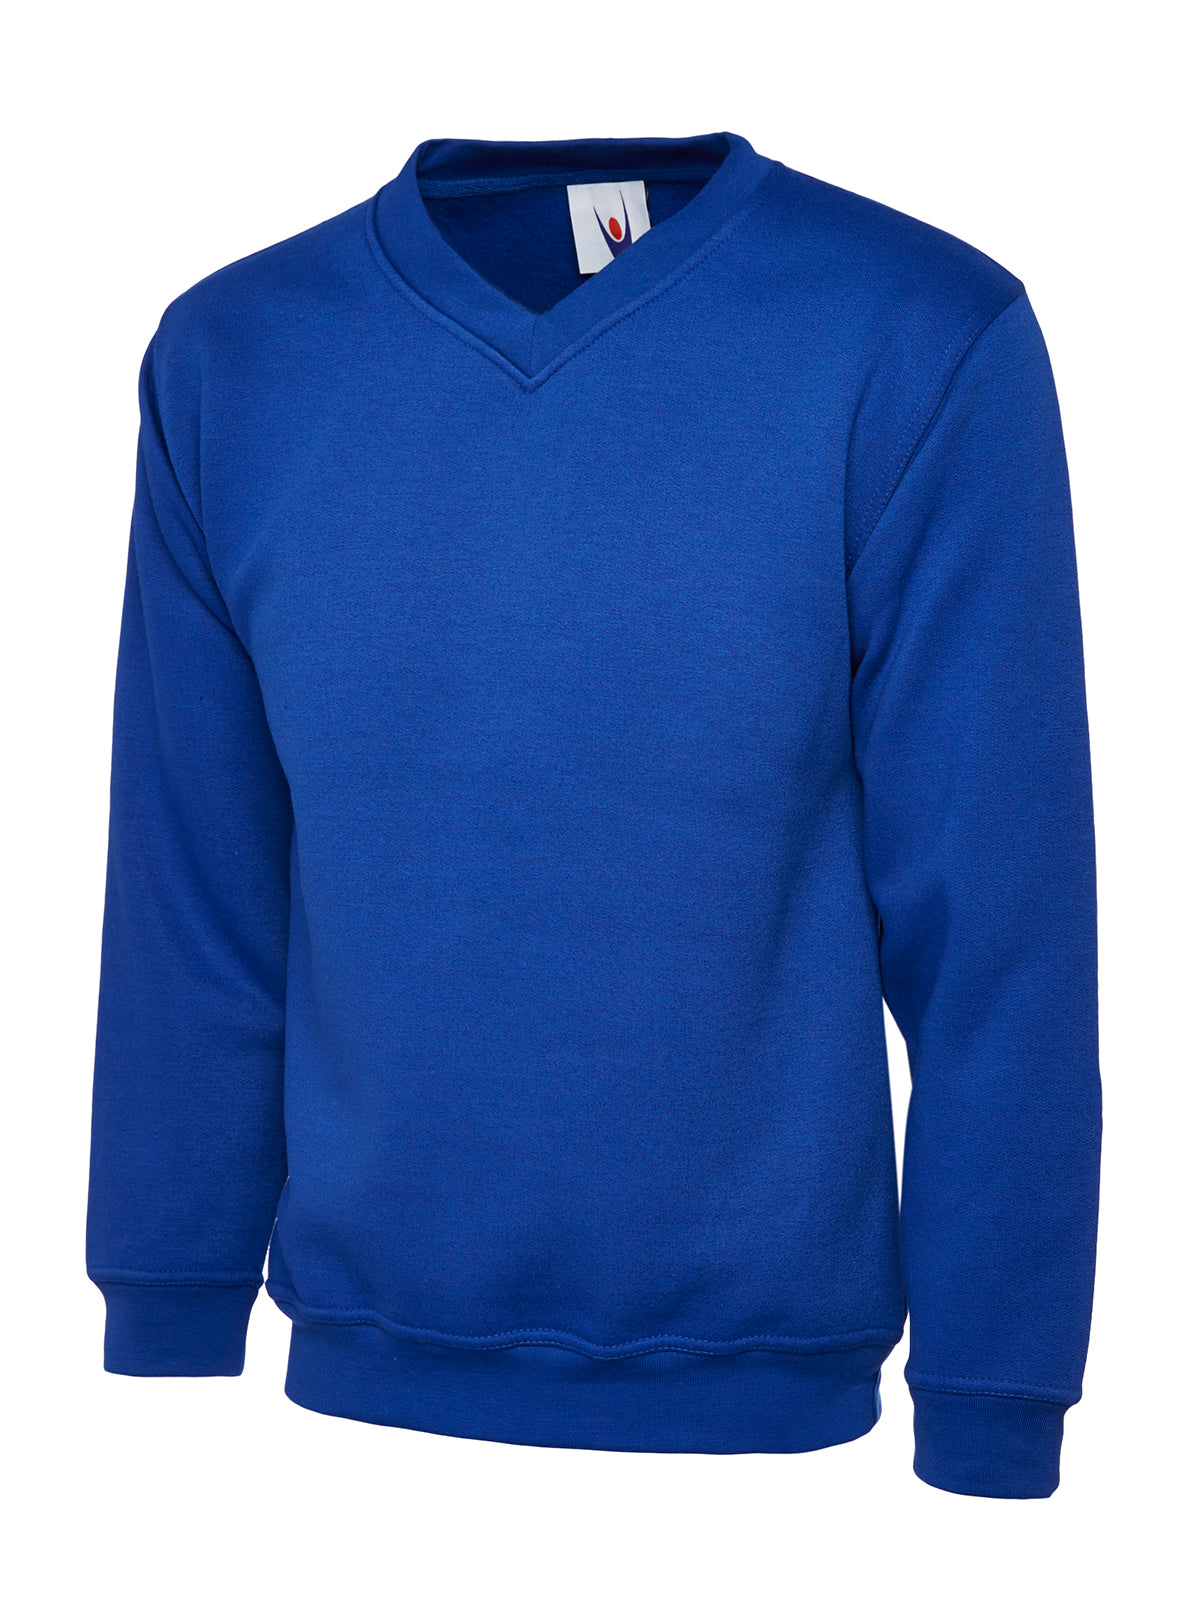 Uneek Premium V-Neck Sweatshirt UC204 - Royal